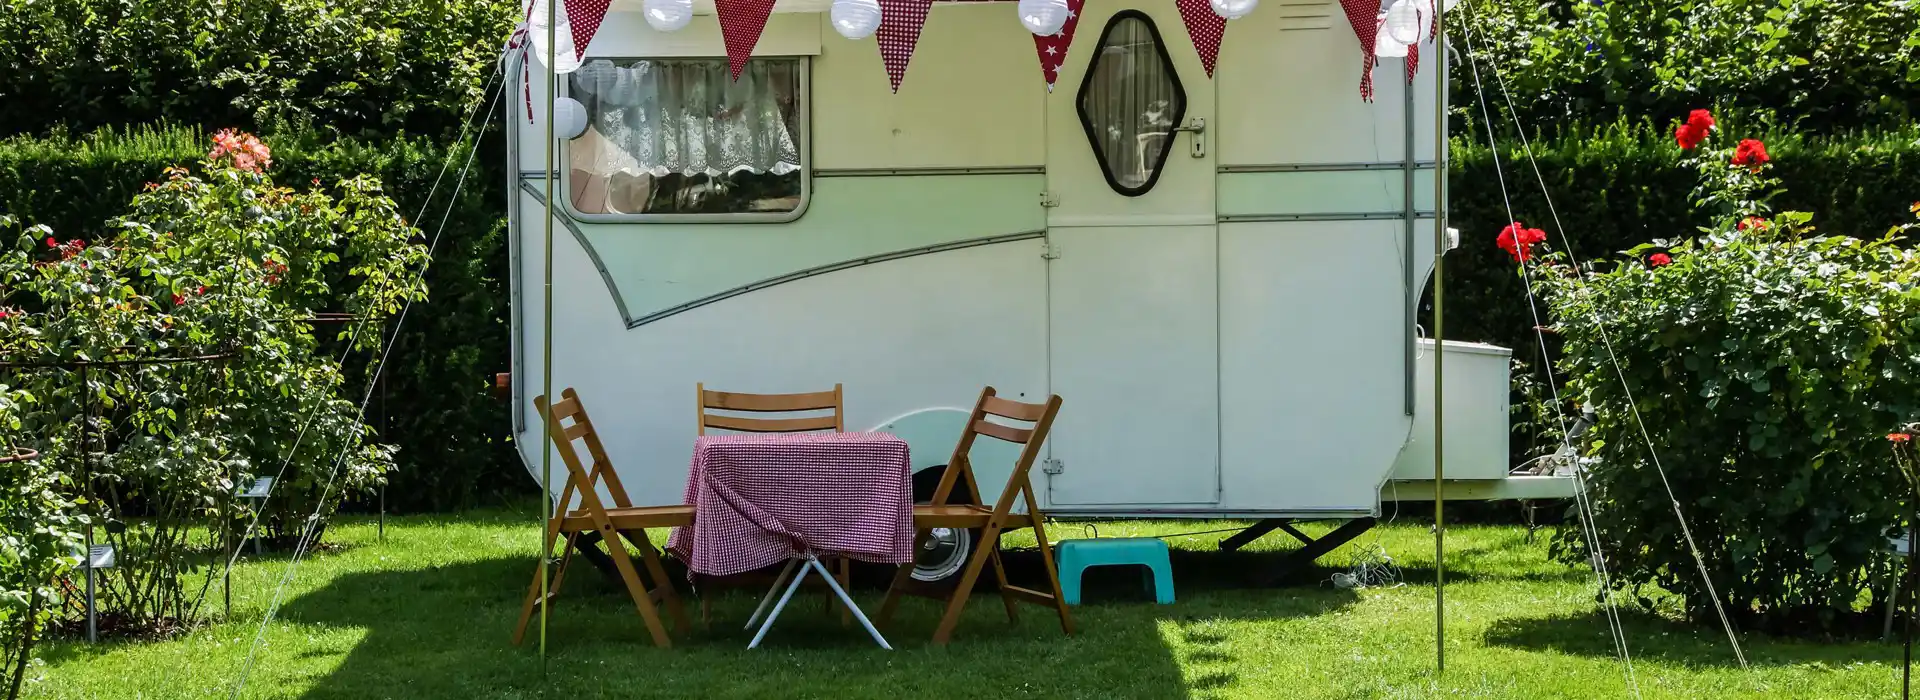 Vintage caravan holidays